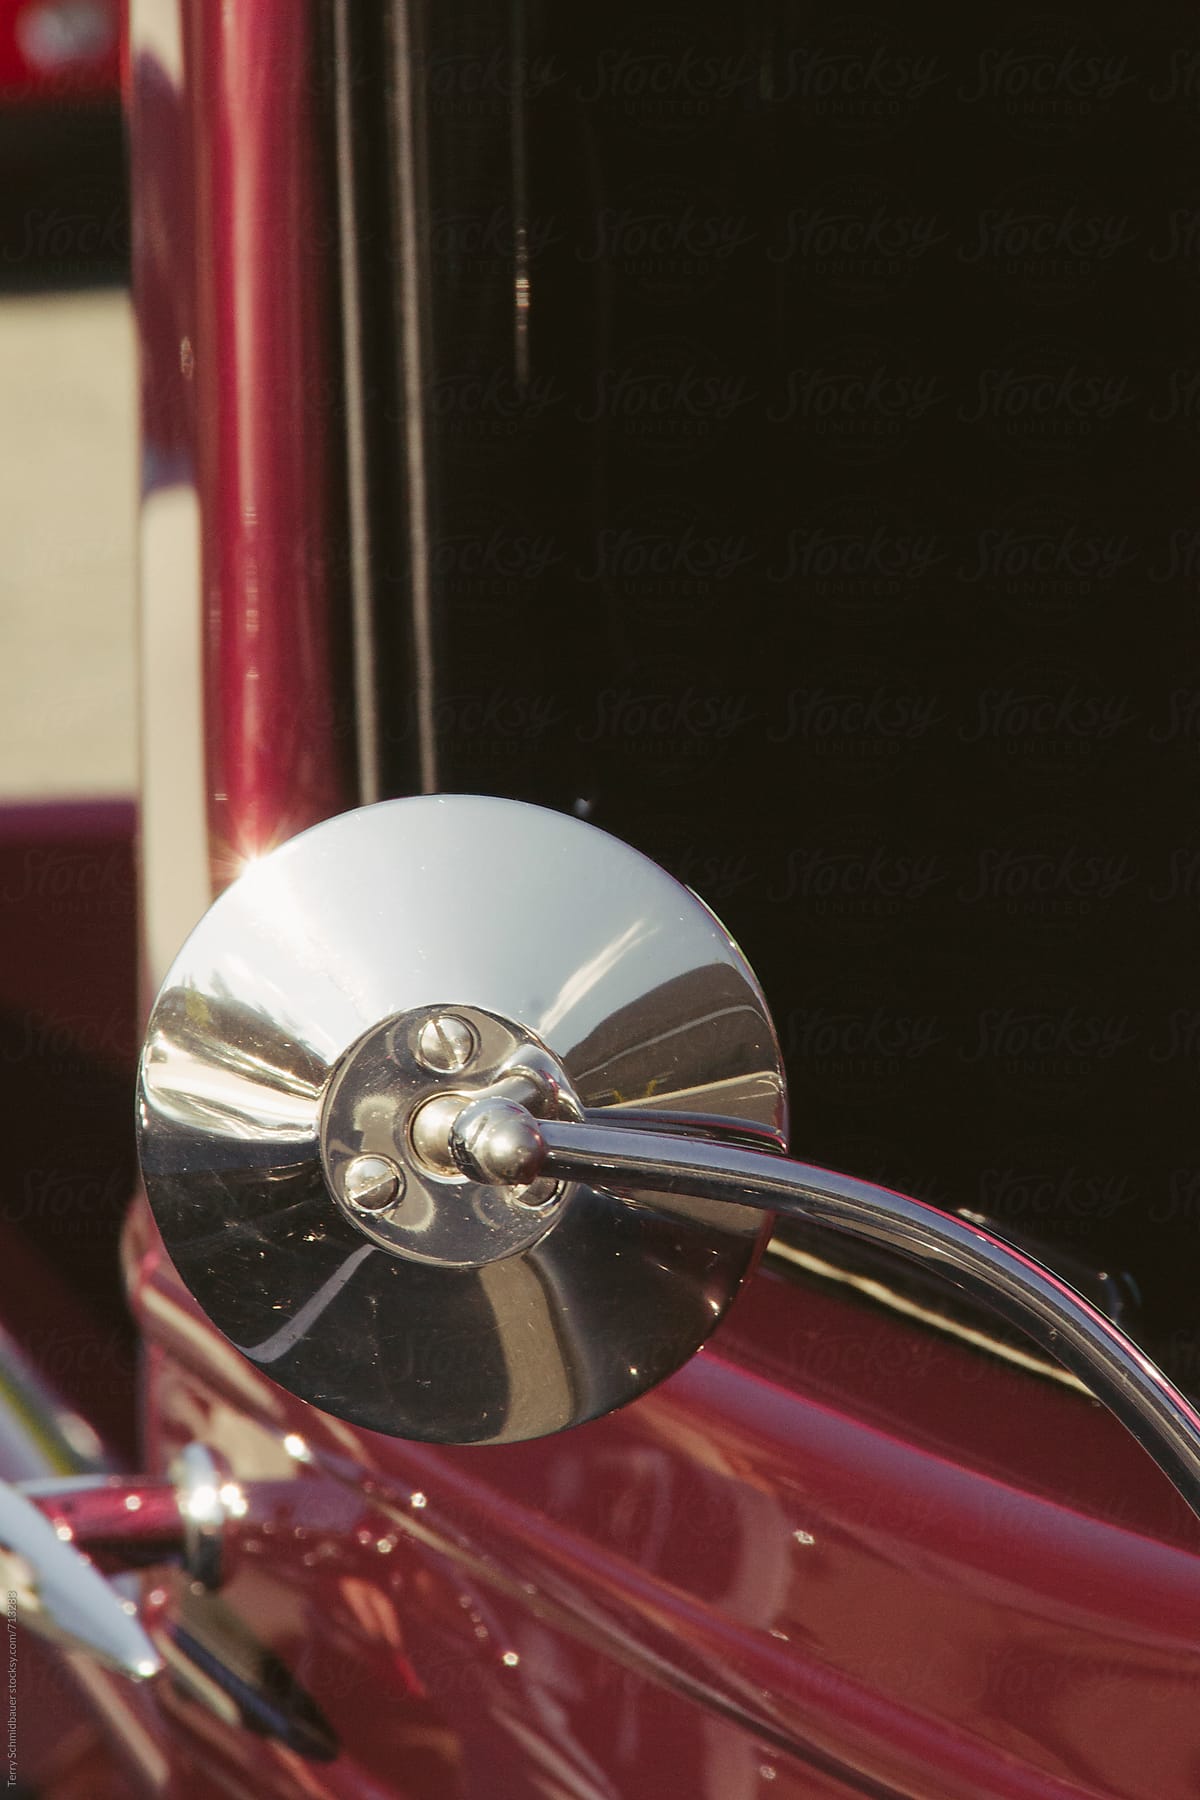 Detail of Vintage Automobile